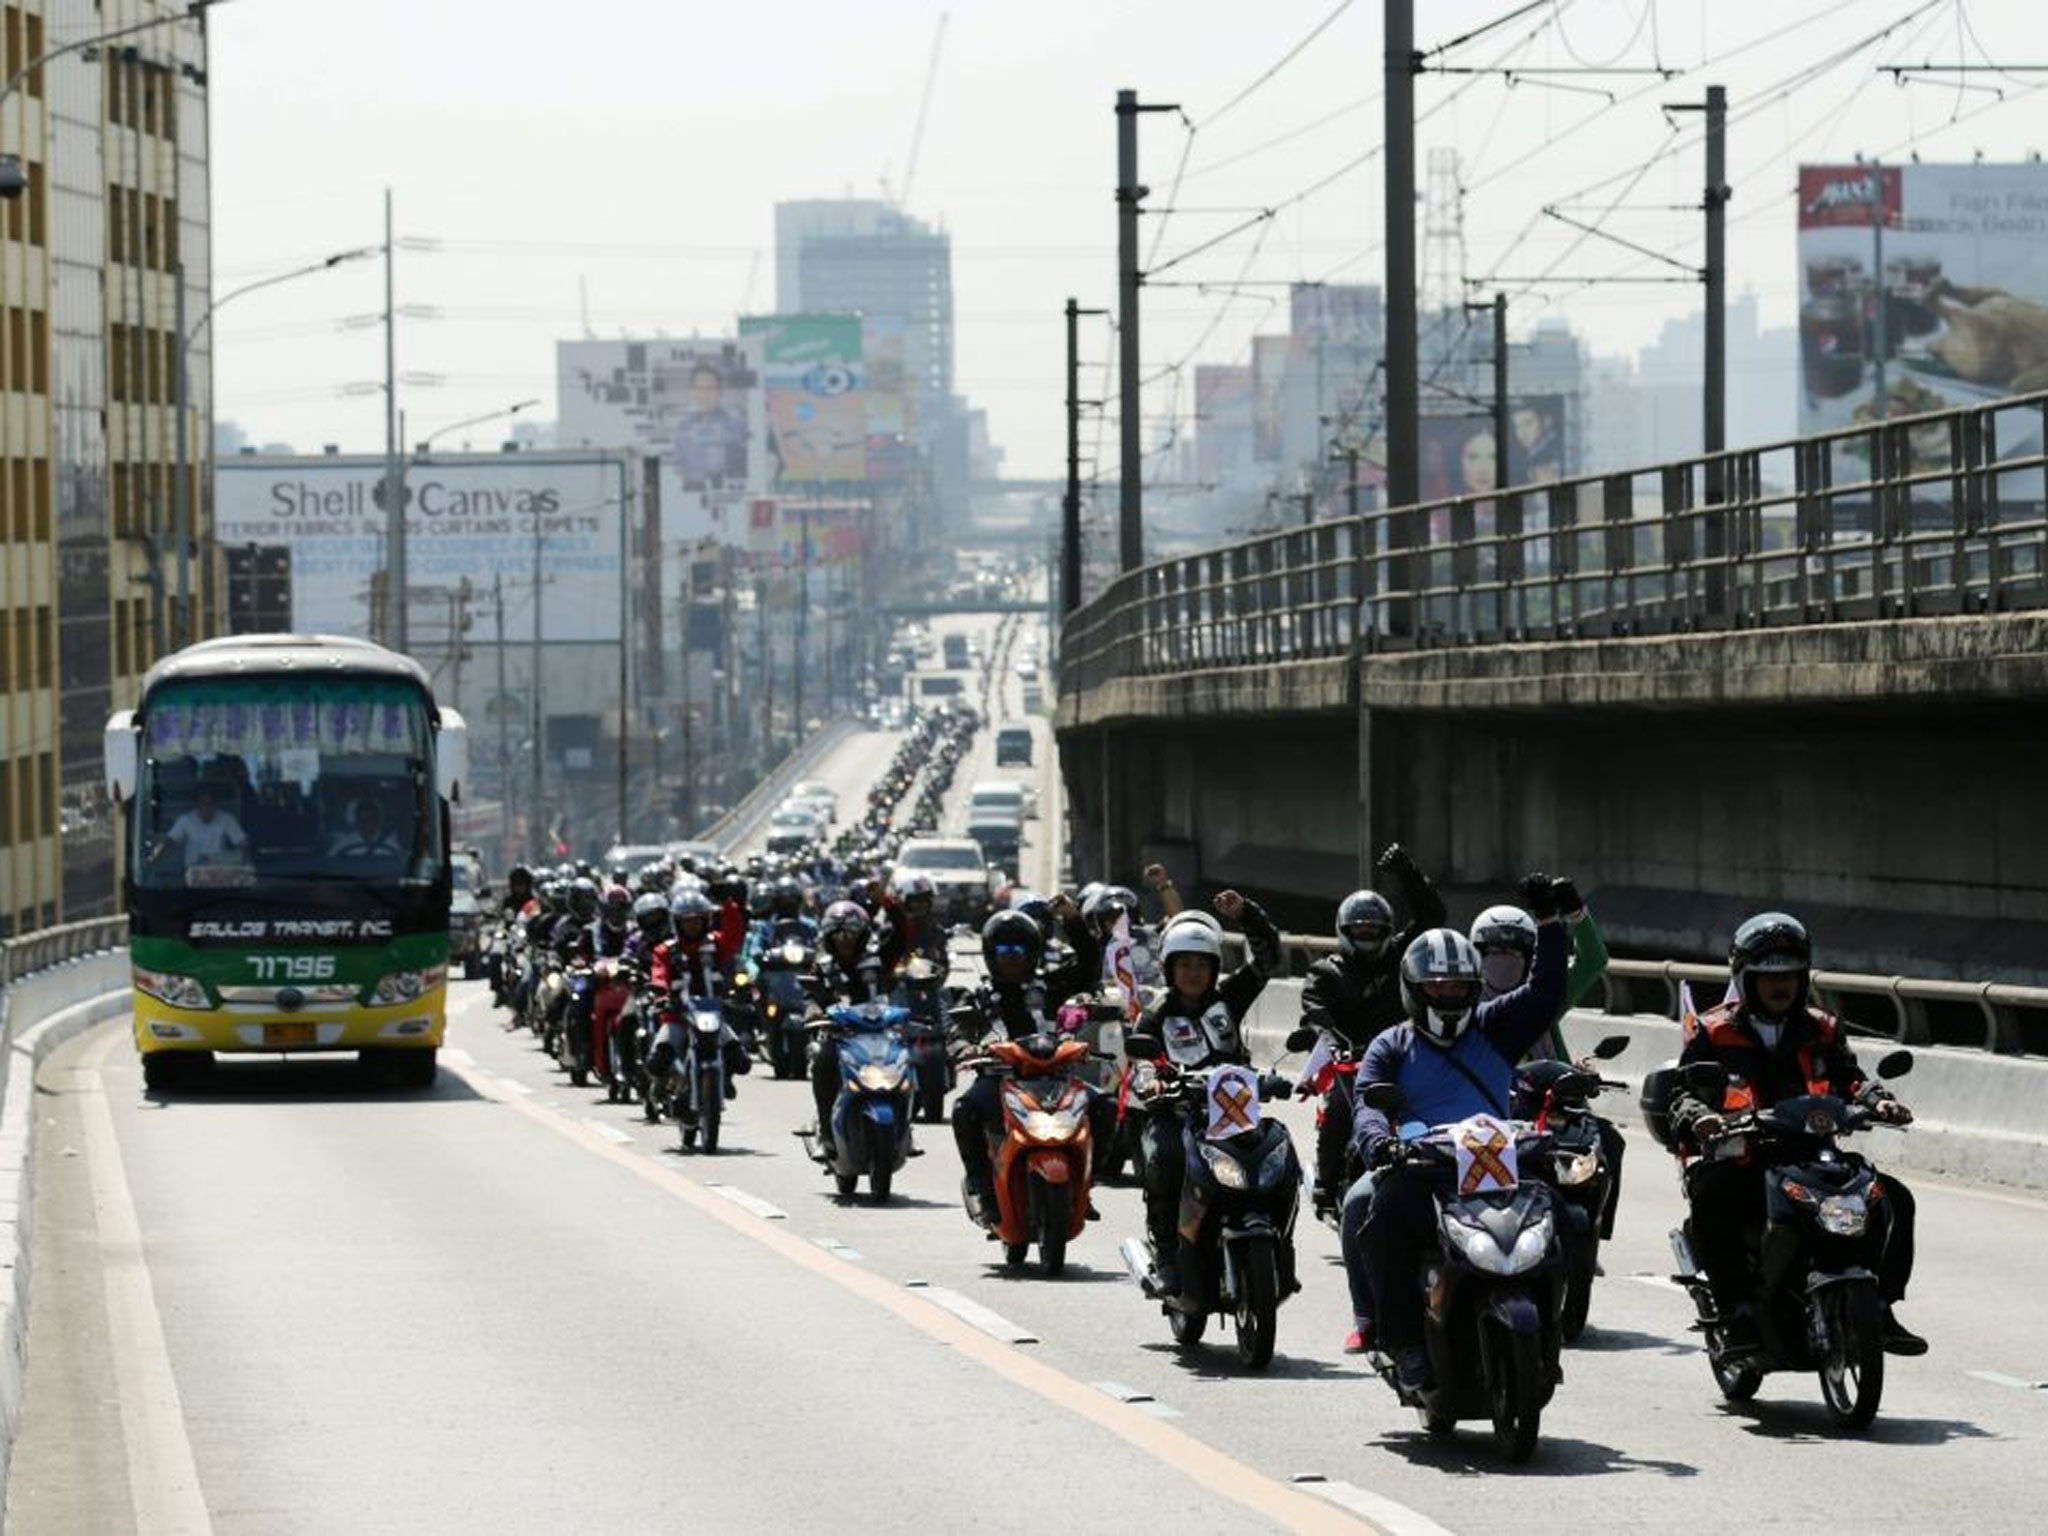 The protesters drove through Quezon City, a district of Manila city